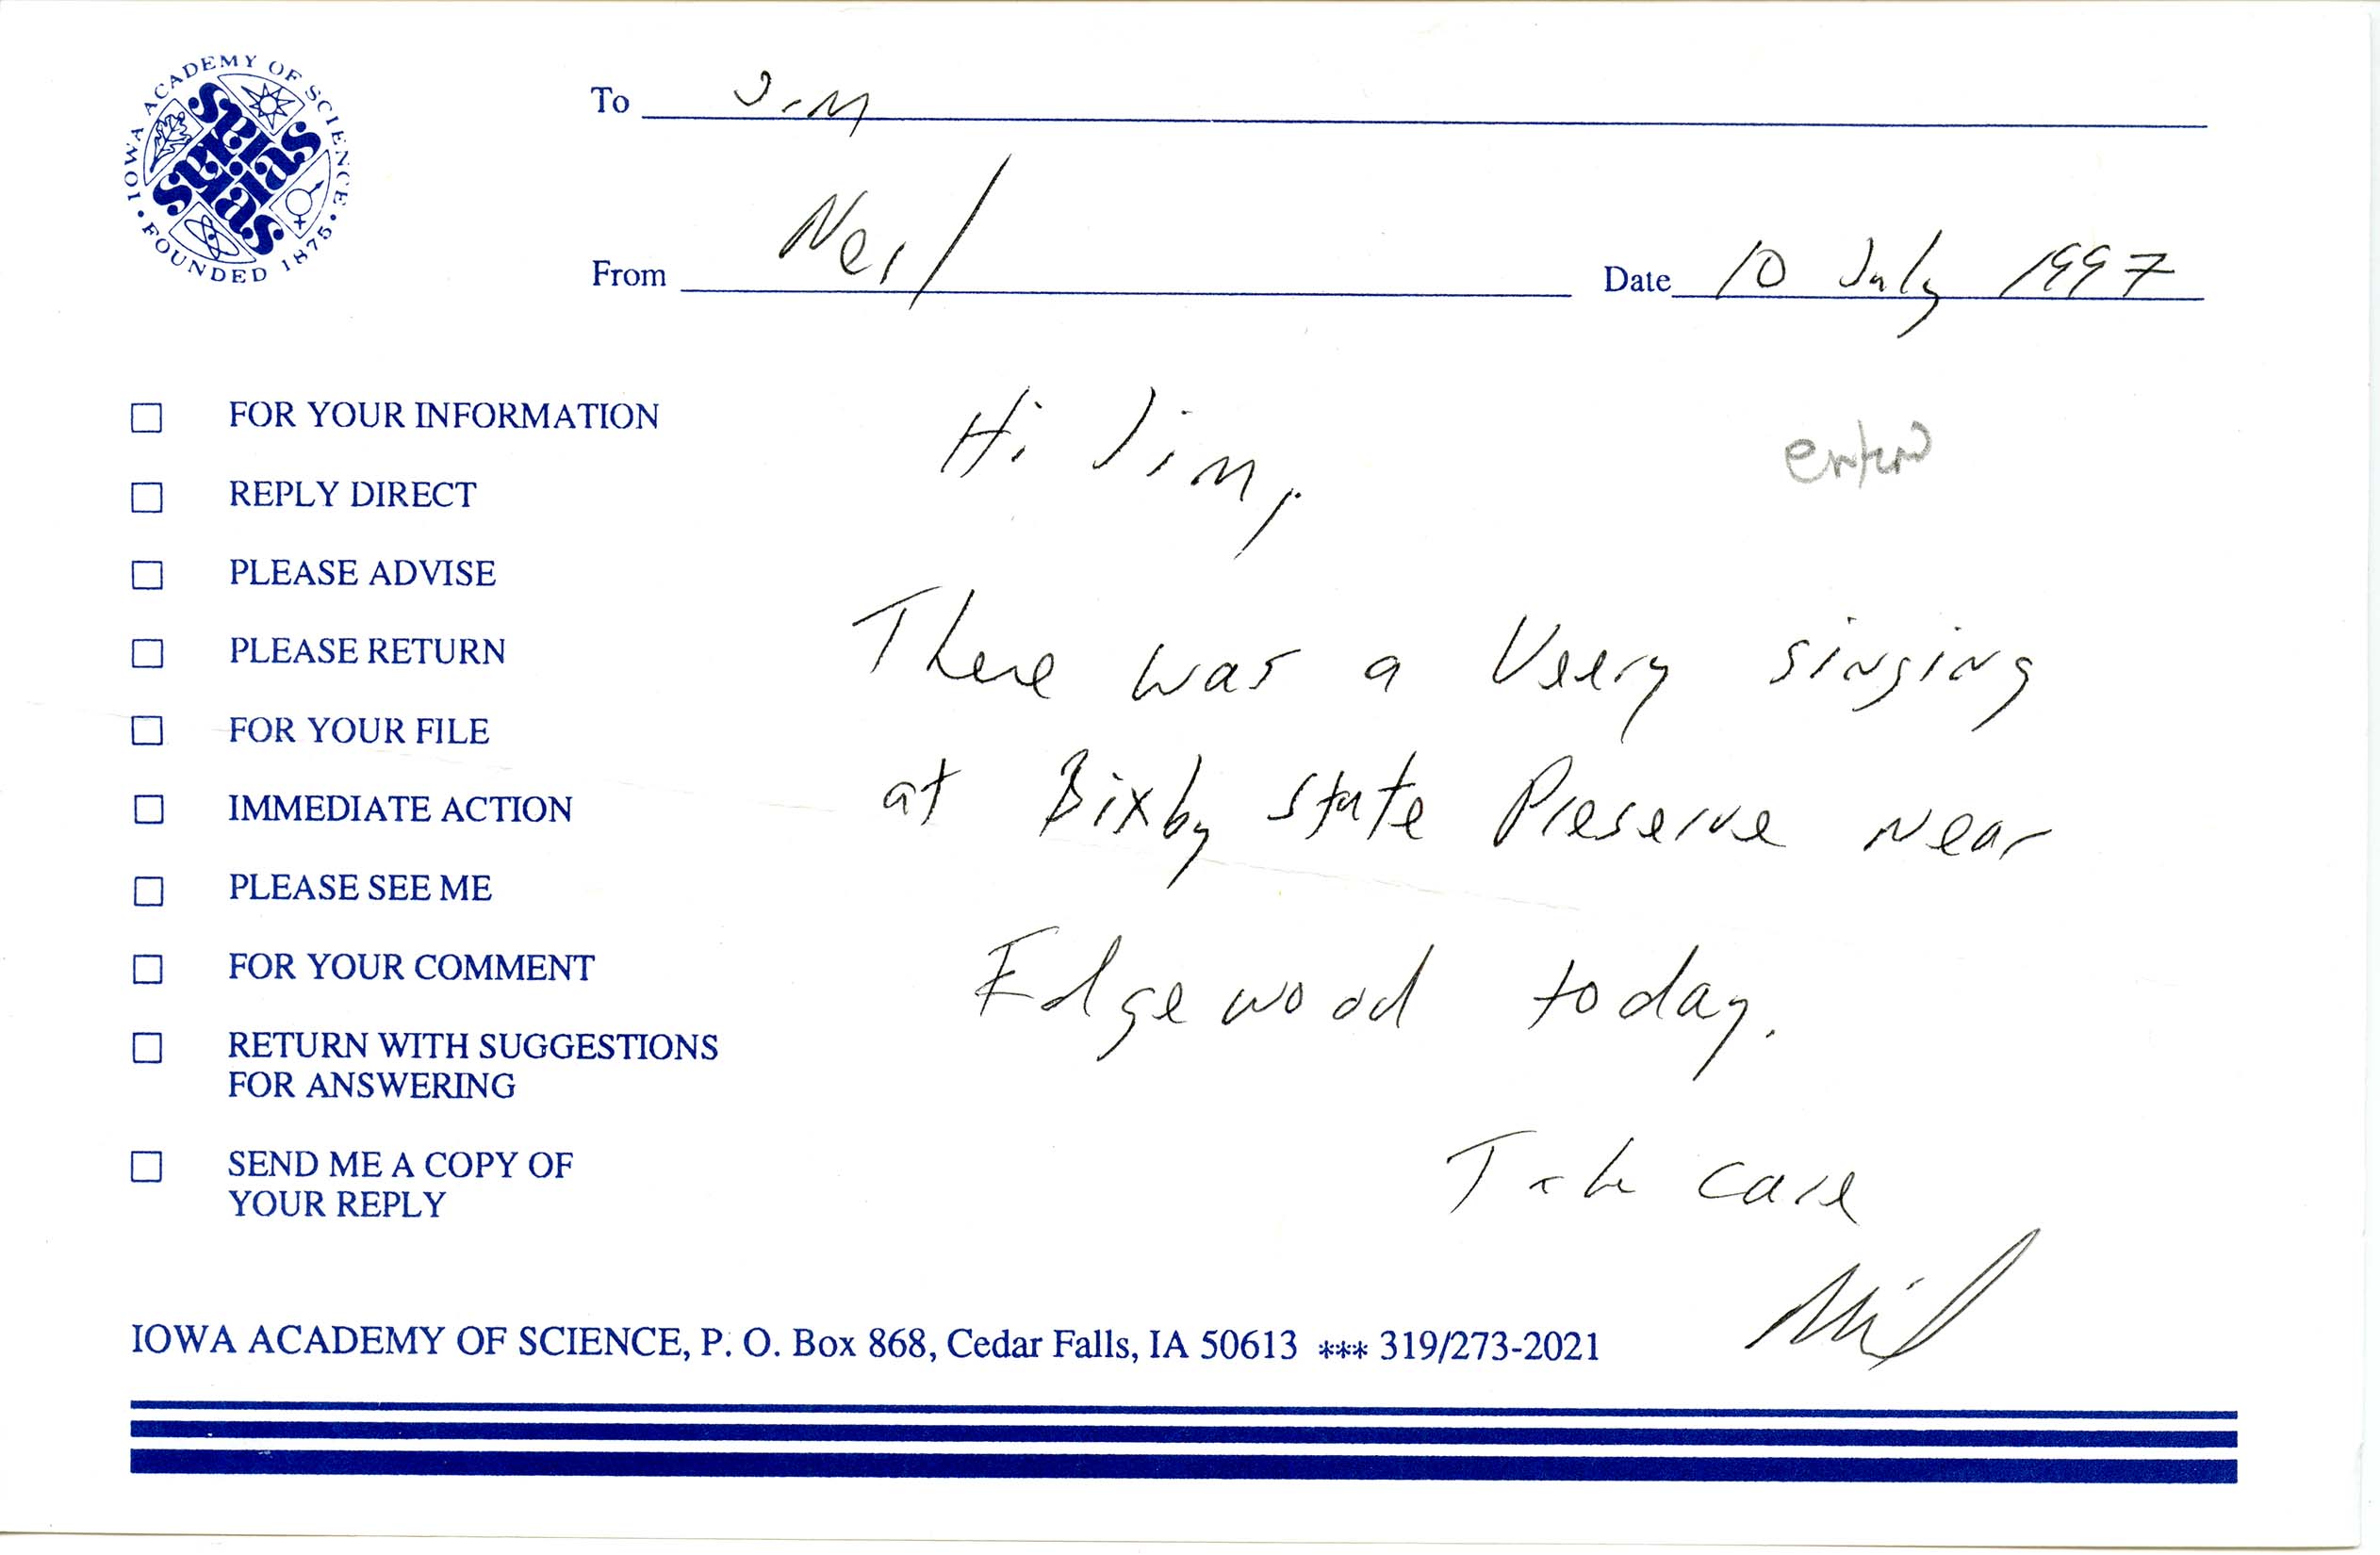 Neil Bernstein letter to James J. Dinsmore regarding a Veery sighting, July 10, 1997